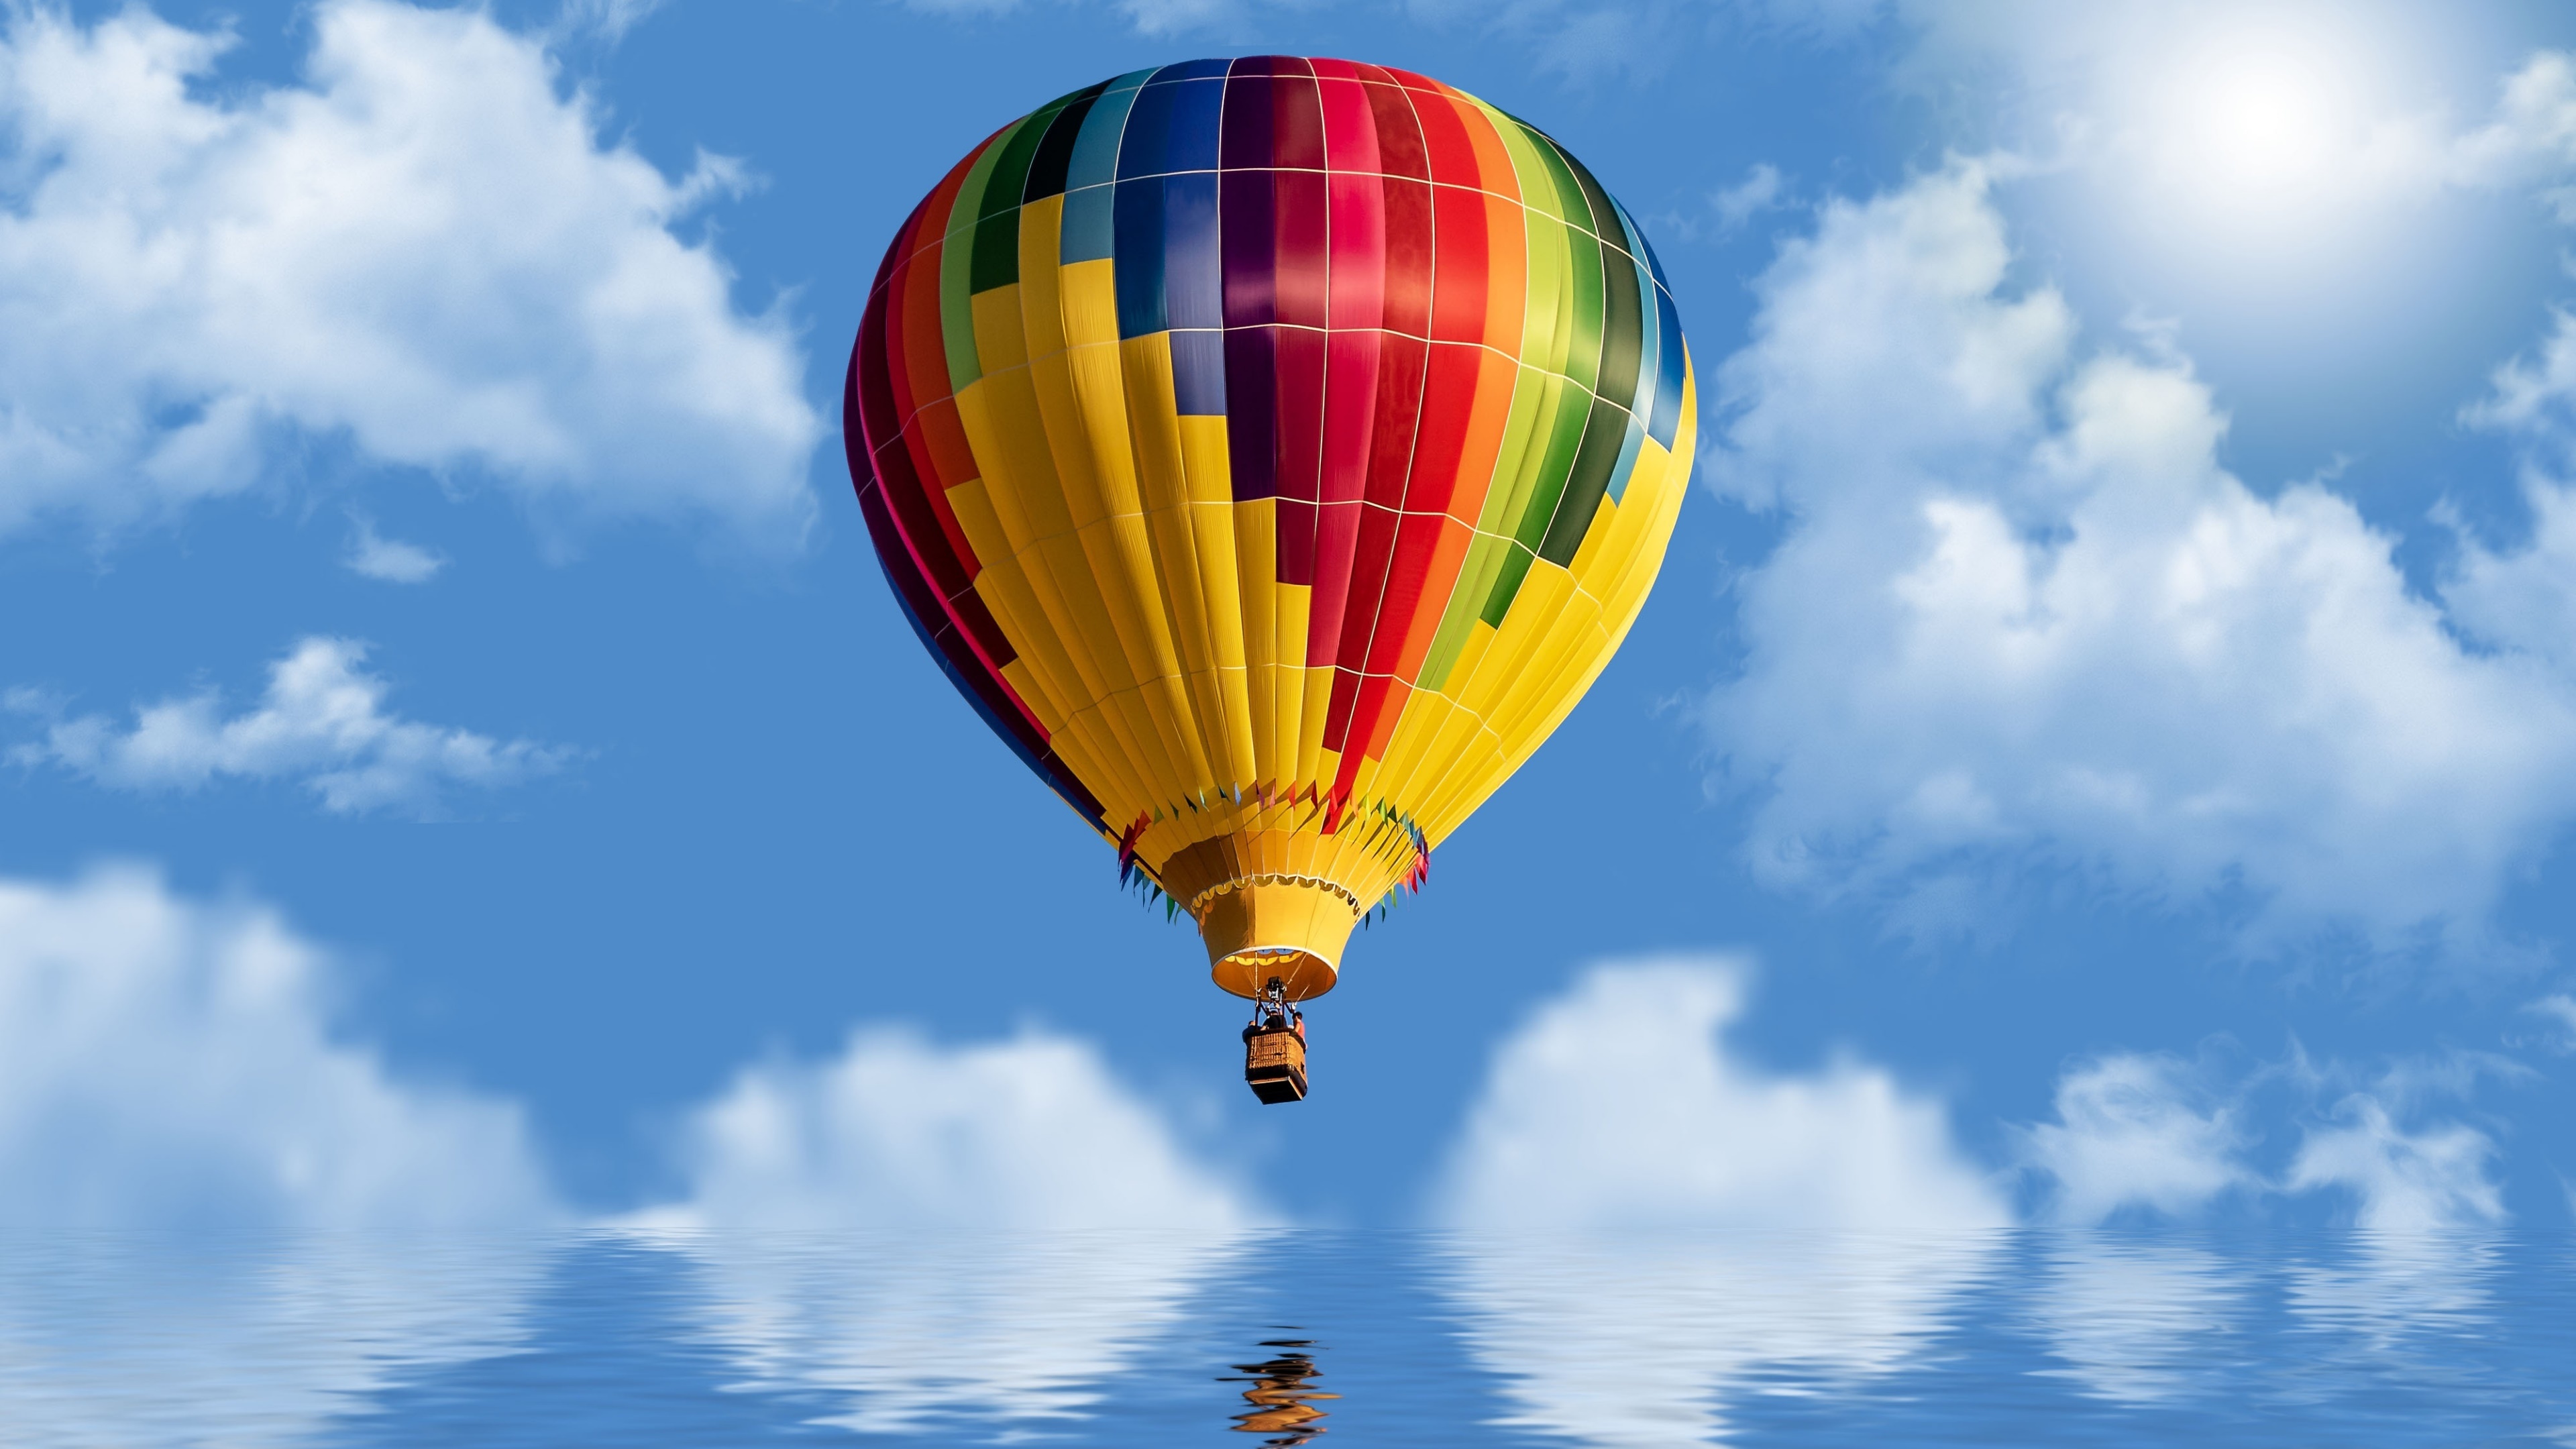 Hot Air Balloon: Aeronautics, Heated Air, Multi-Colored Envelope Carrying a Basket. 3840x2160 4K Background.